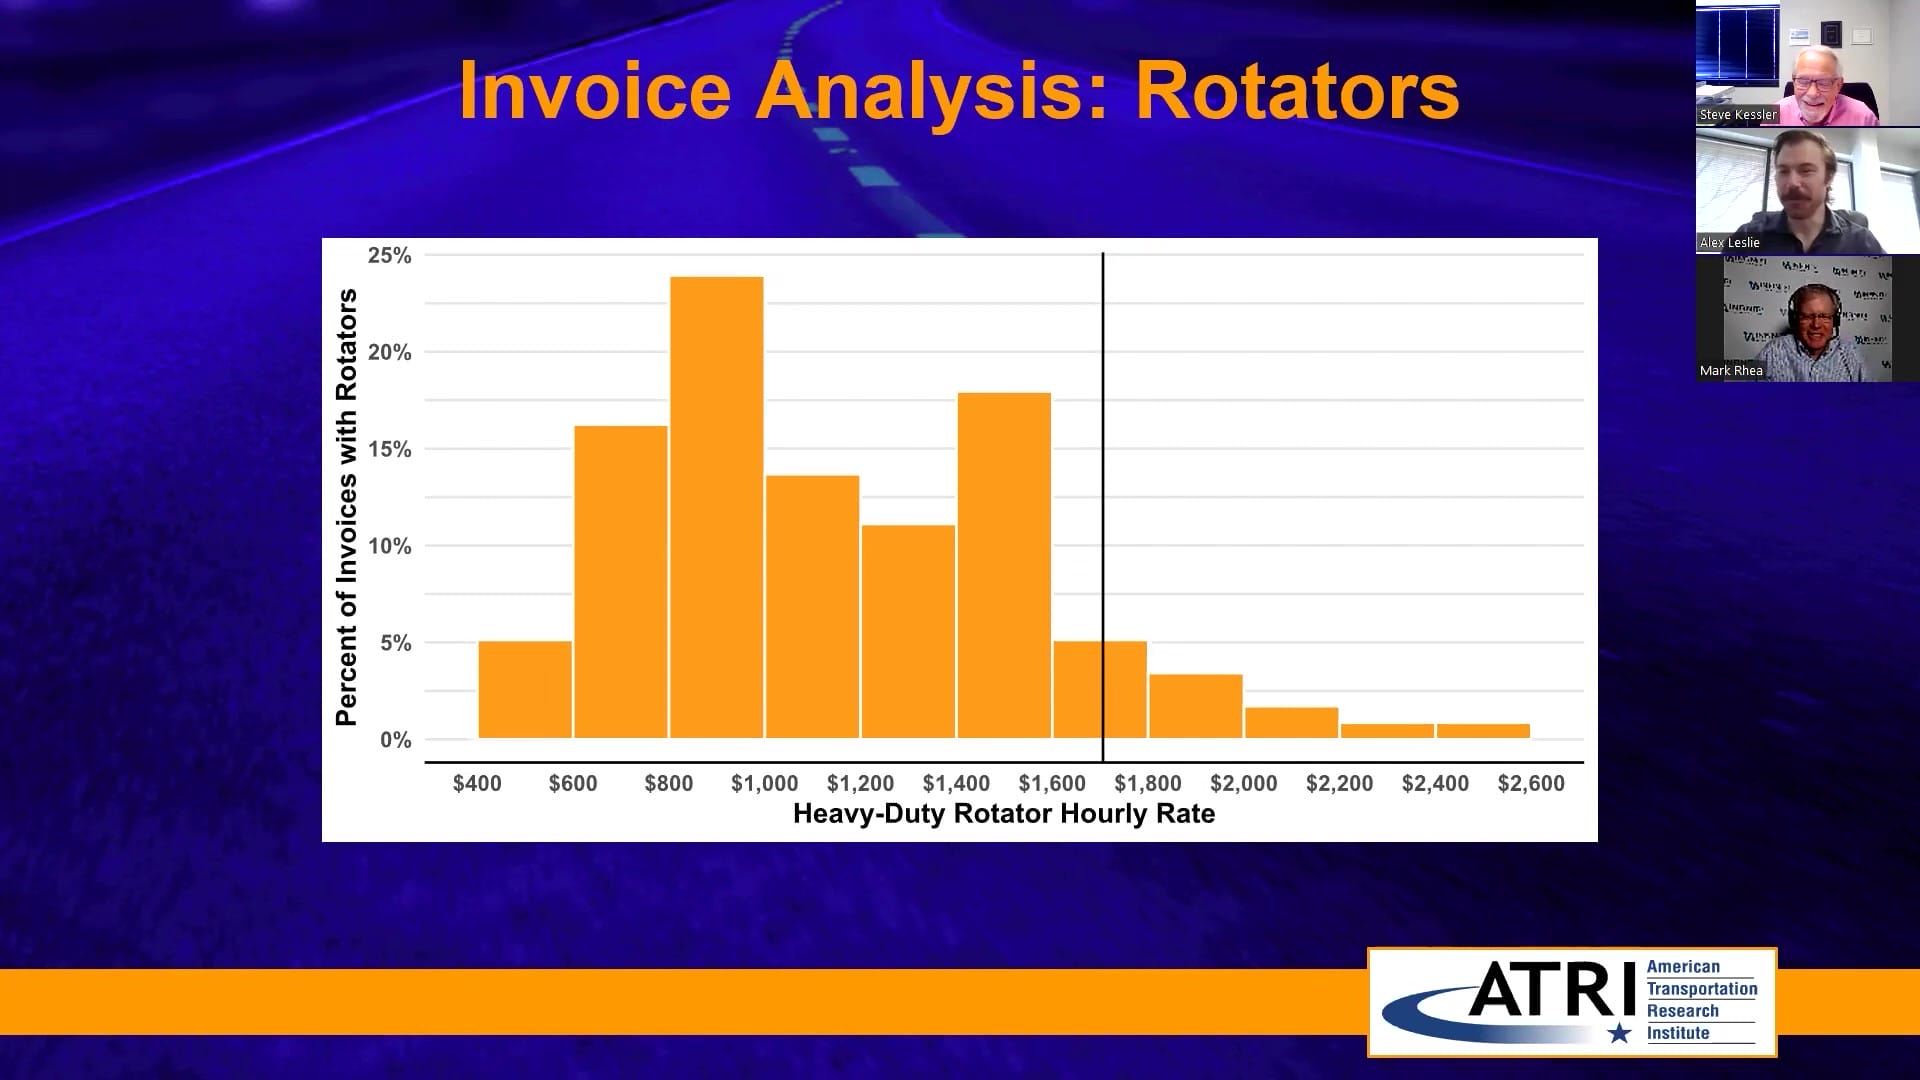 ATRI’s Research on Predatory Towing Invoice Analysis Rotators